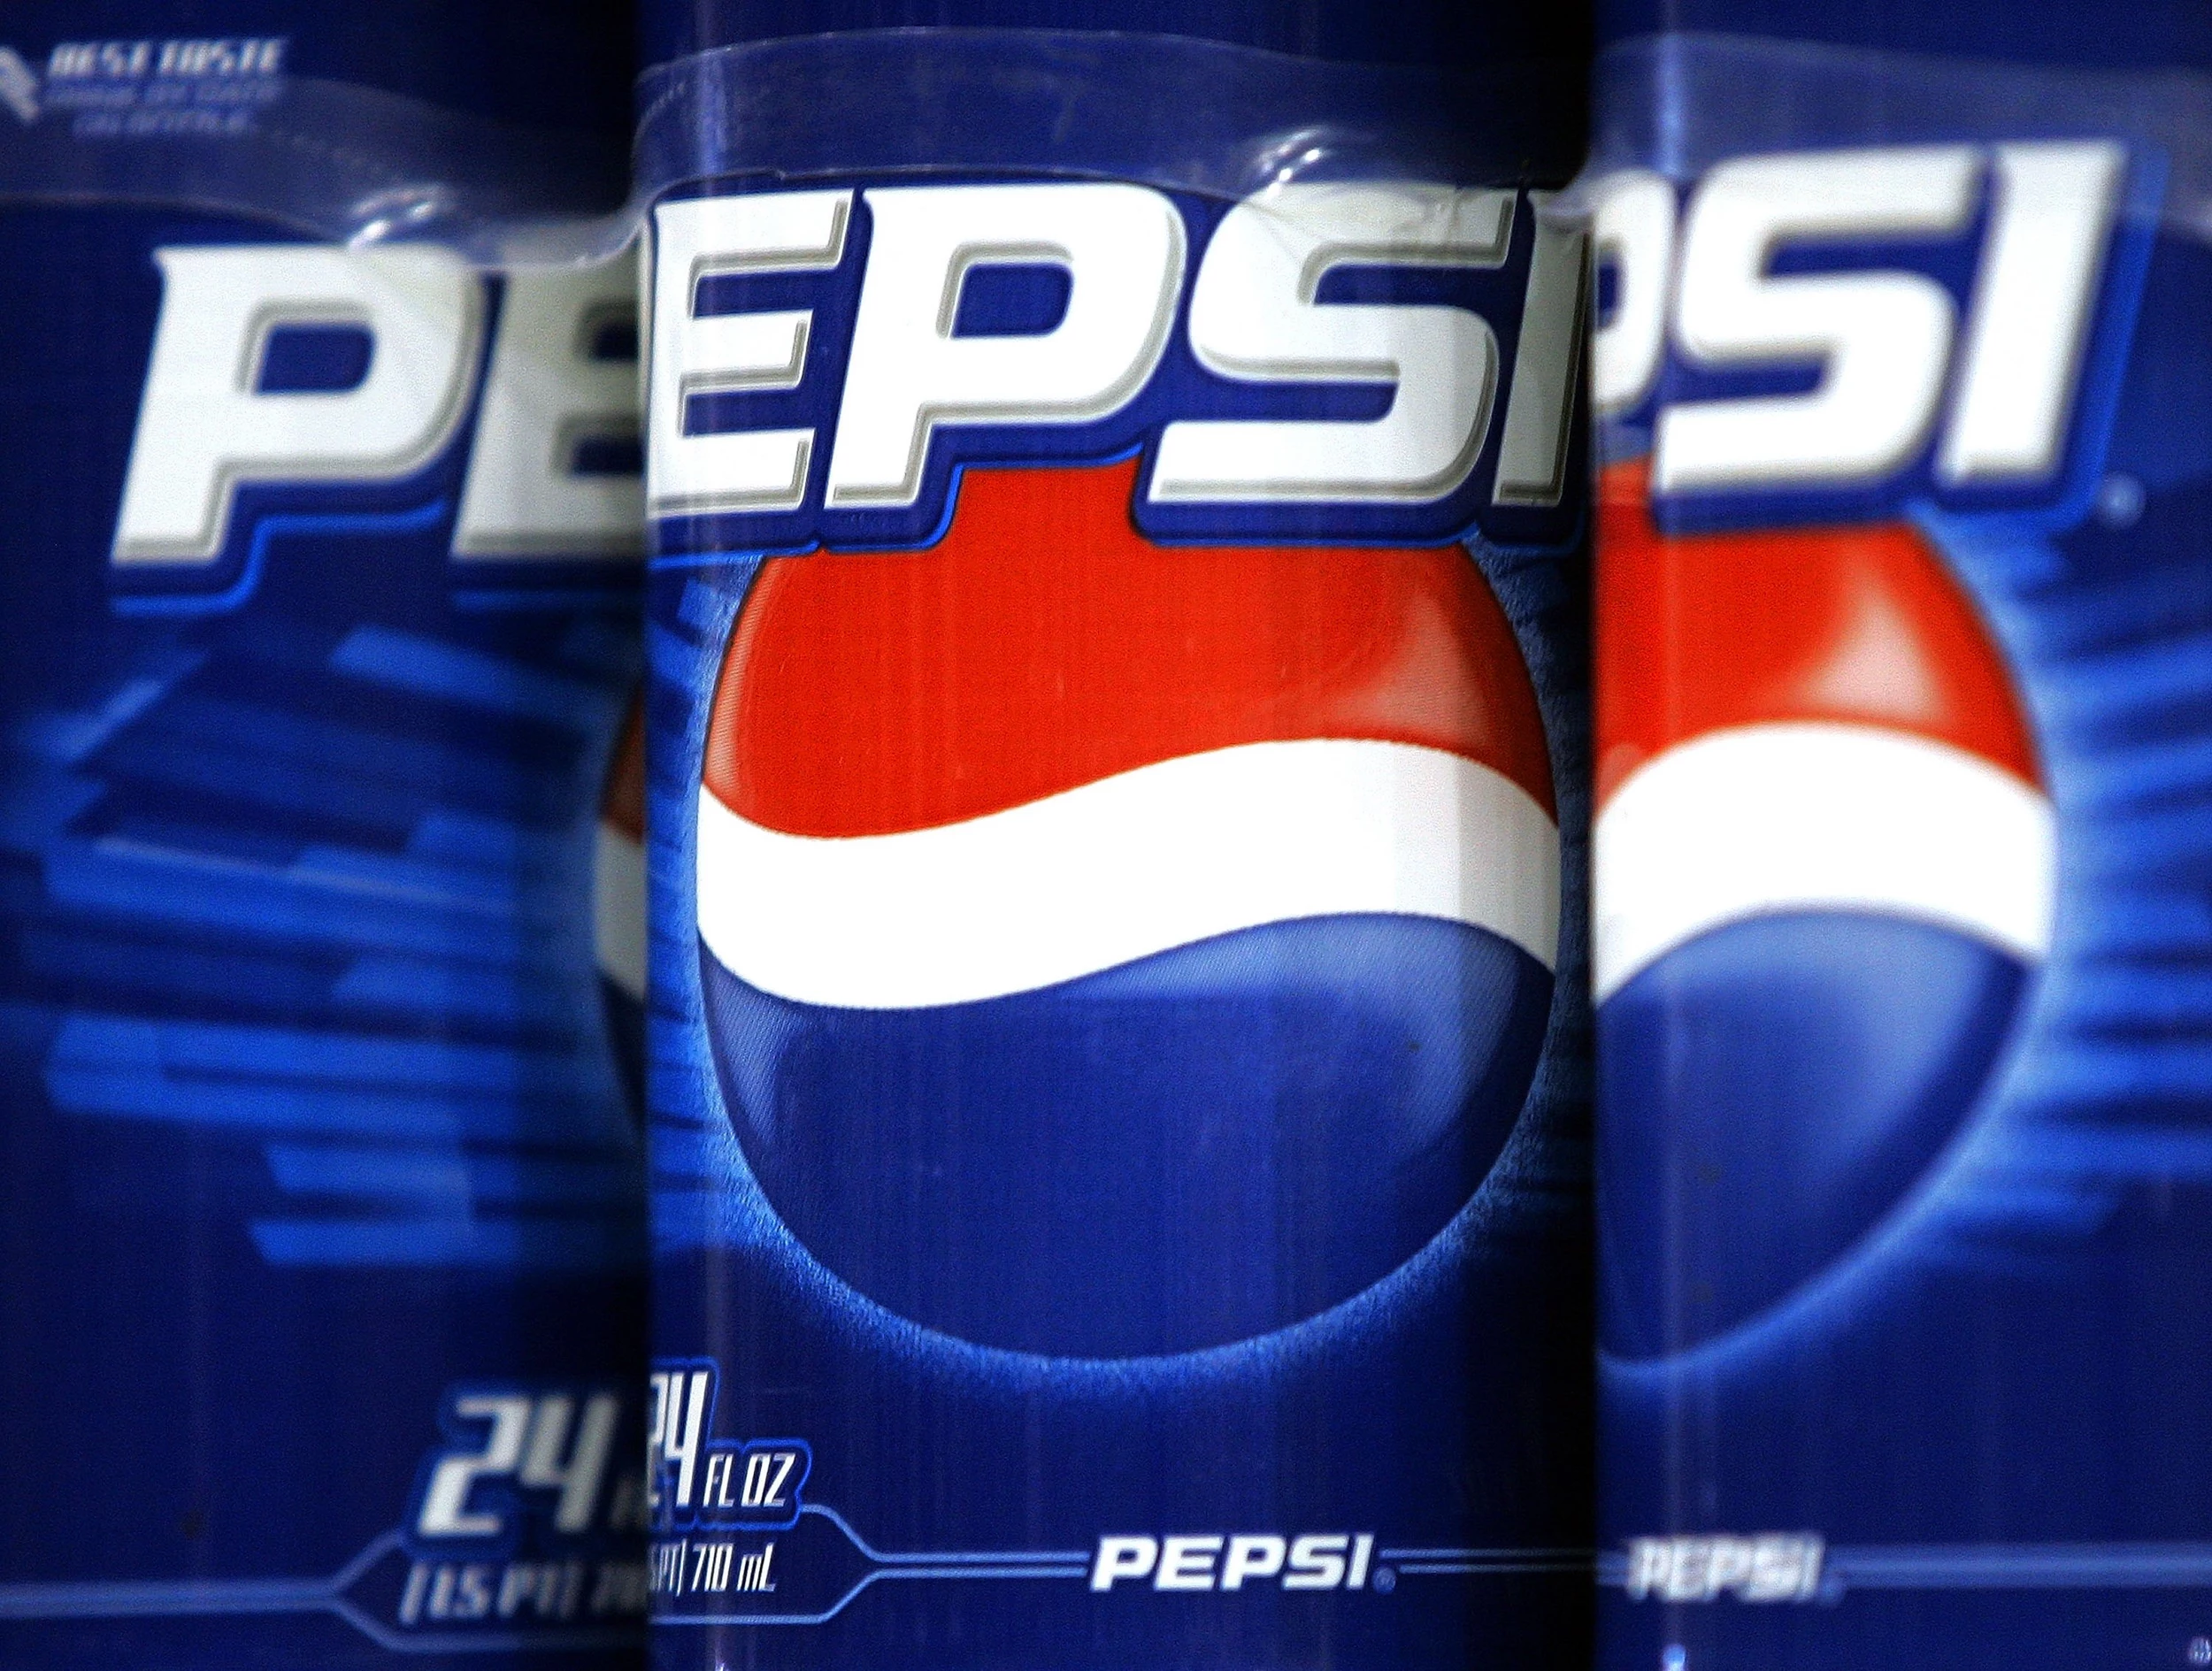 Pepsi Bringing Back Pepsi Blue After 20 Years